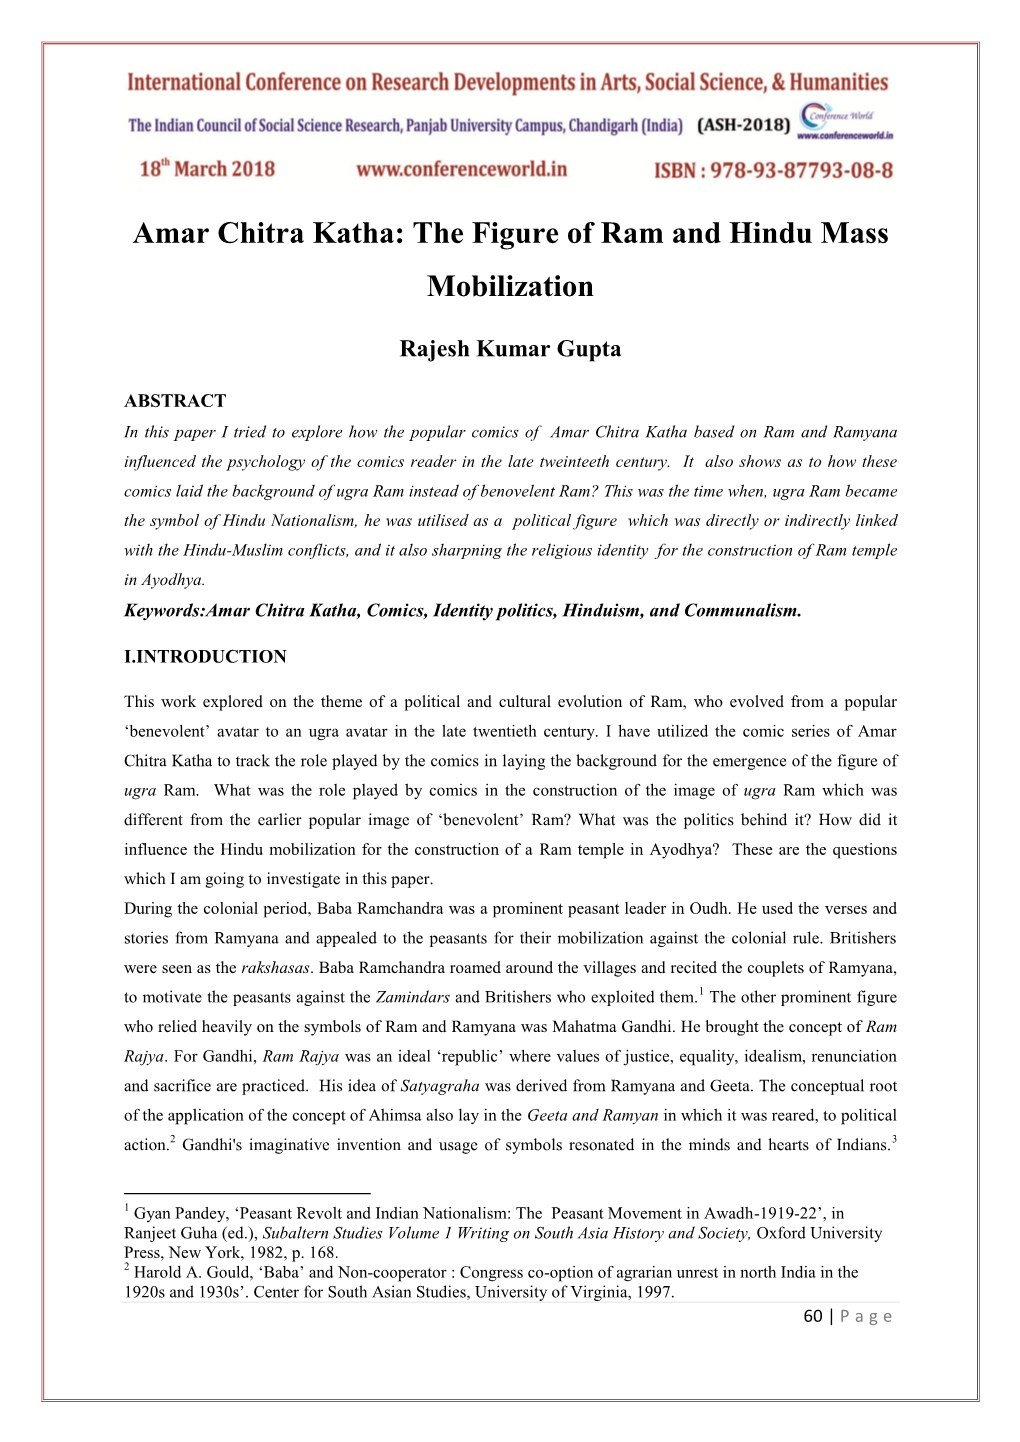 Amar Chitra Katha: the Figure of Ram and Hindu Mass Mobilization